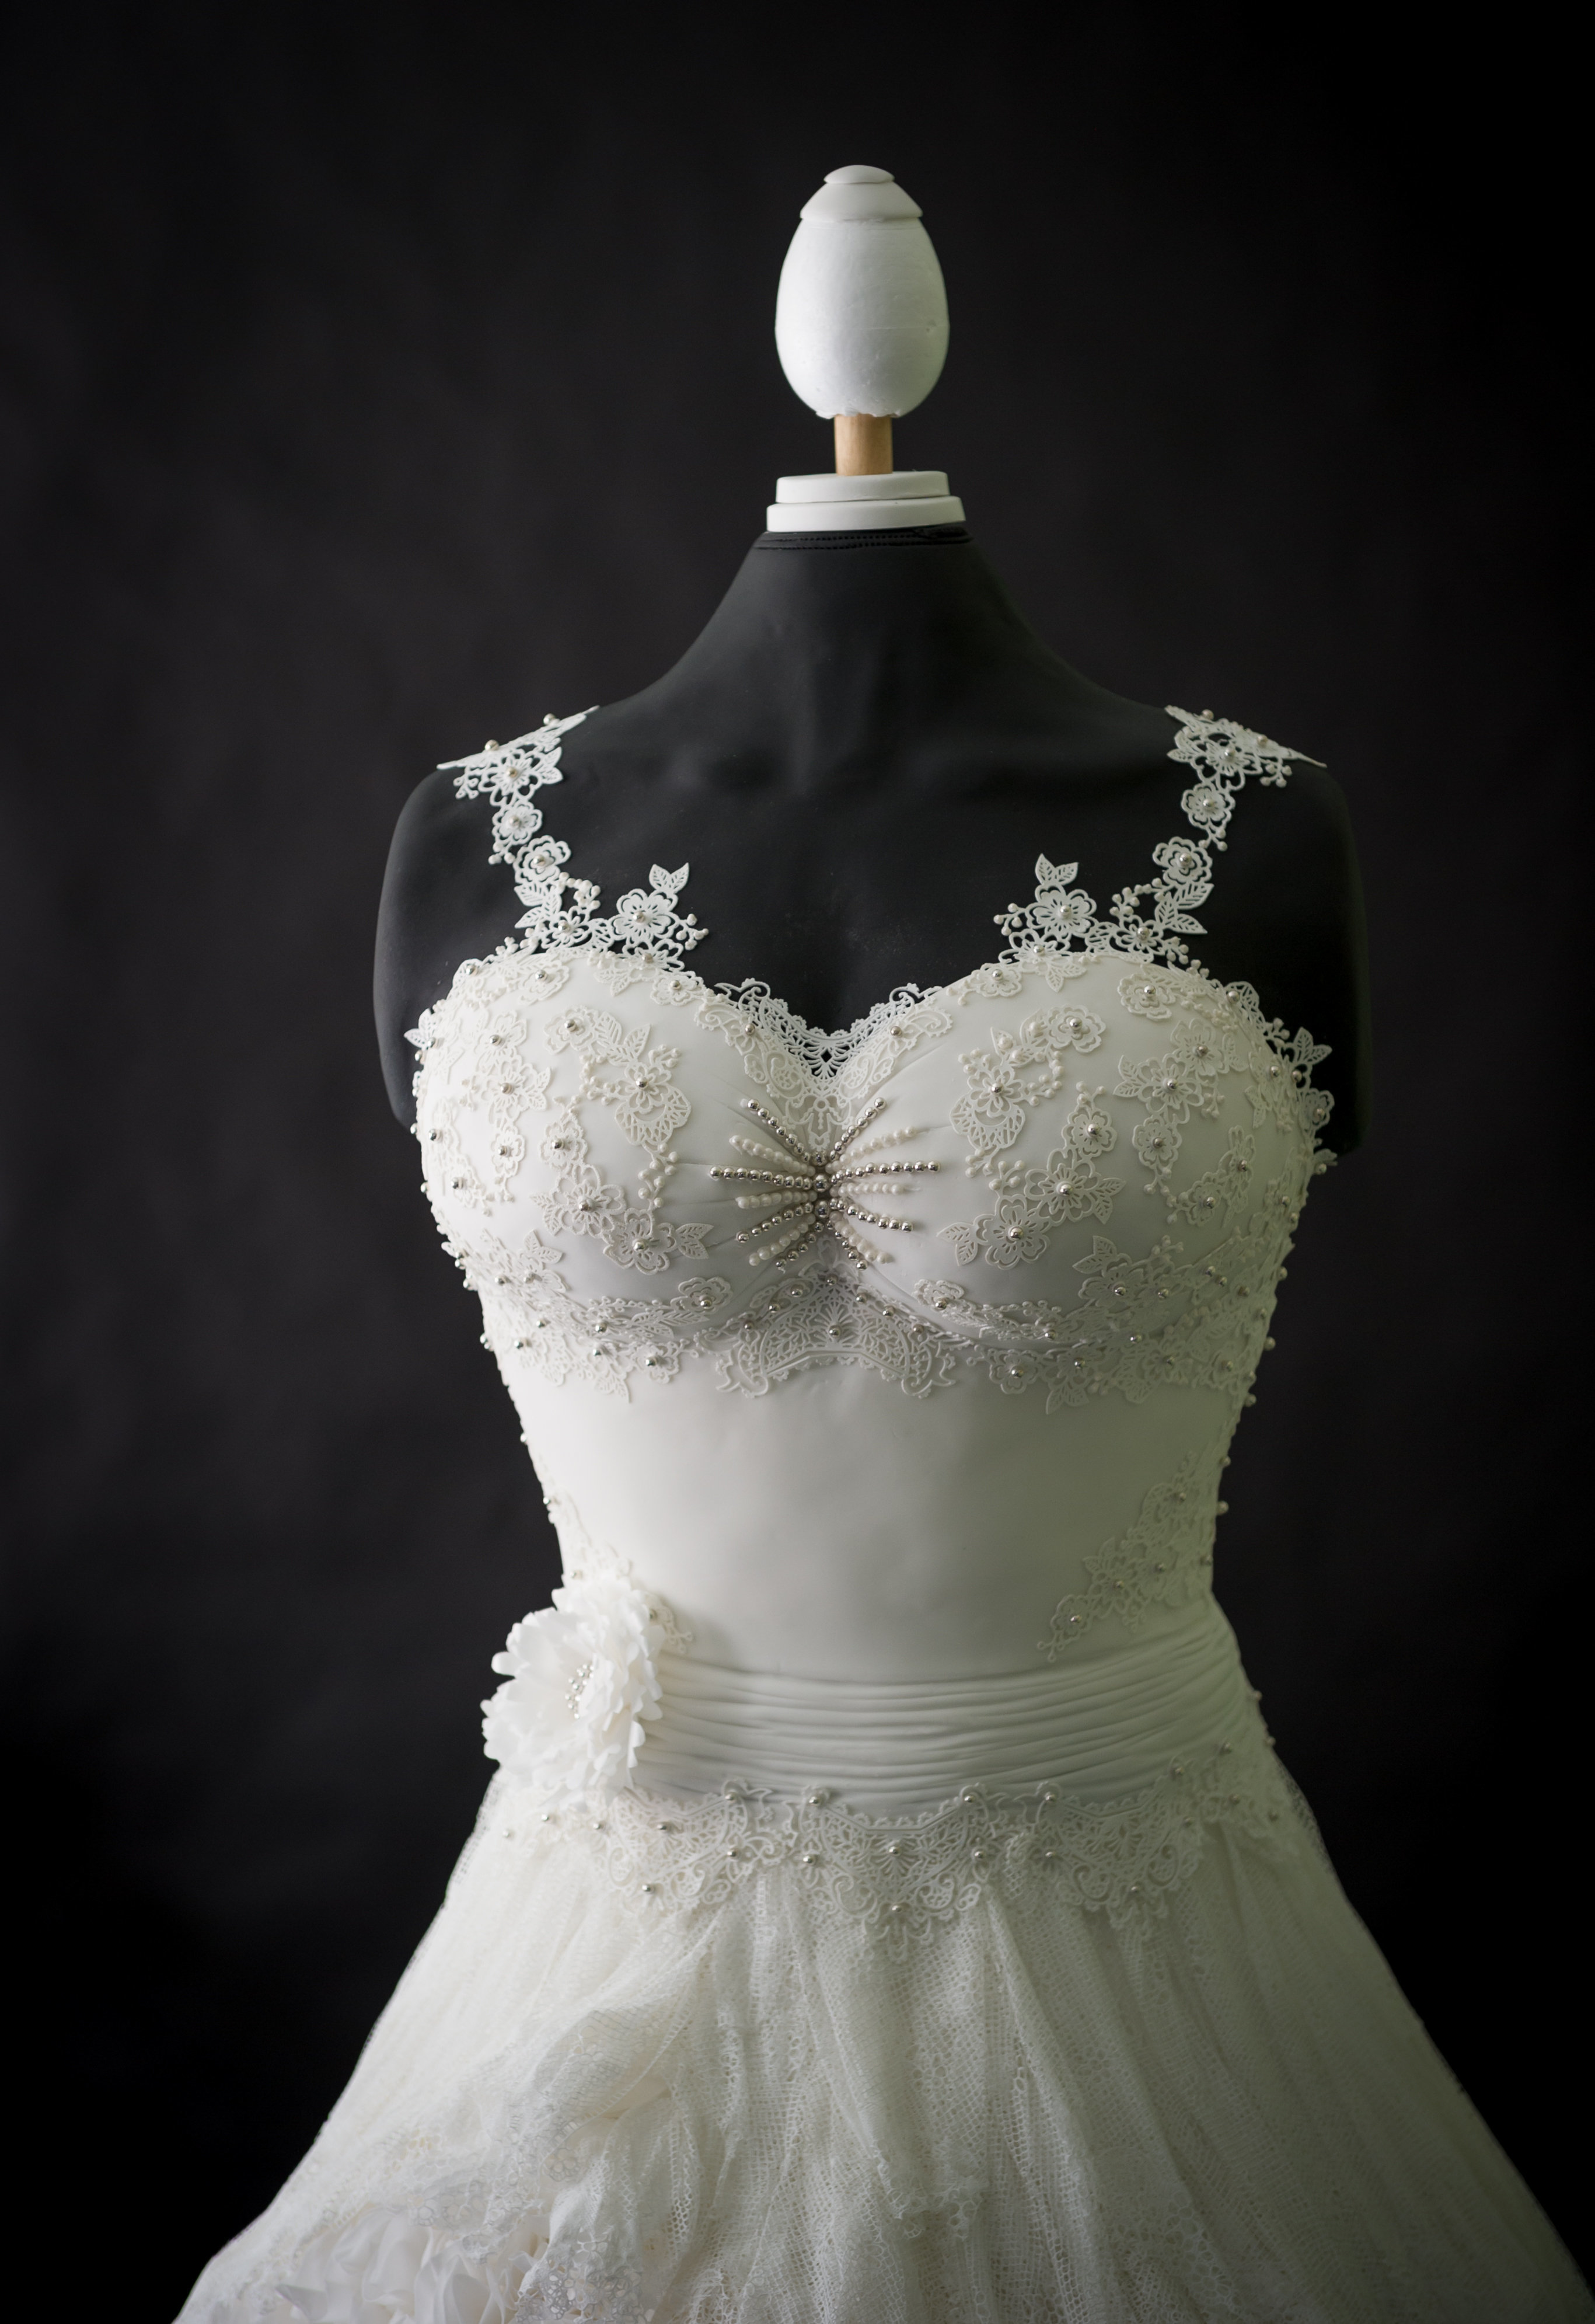 Wedding dress | Wedding dress cake, Dress cake, Bridal shower cakes